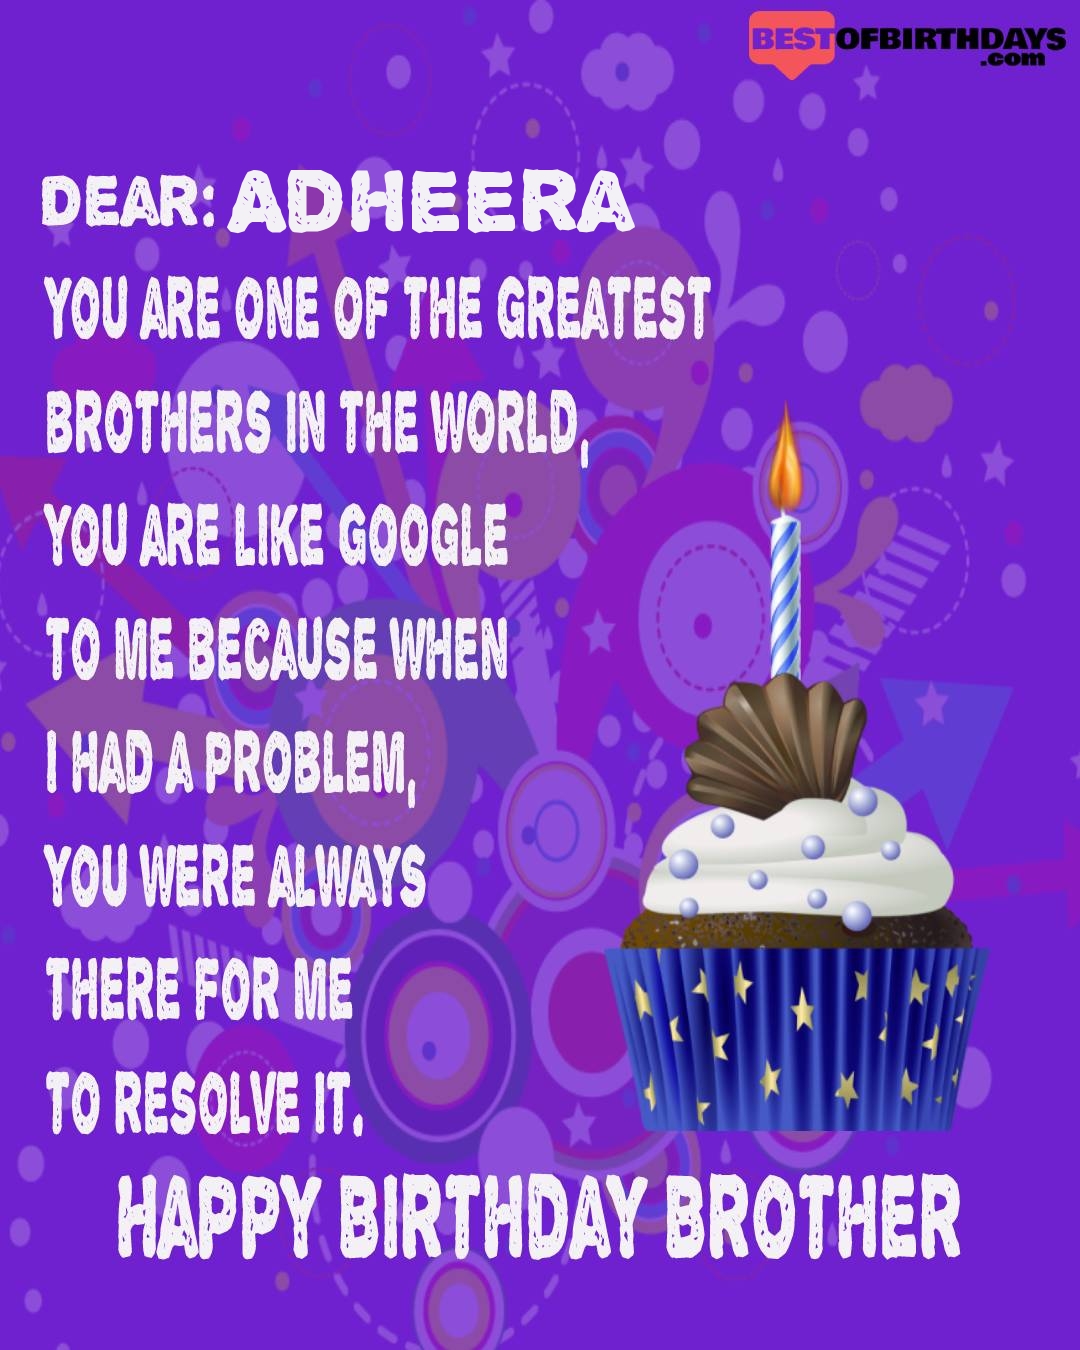 Happy birthday adheera bhai brother bro